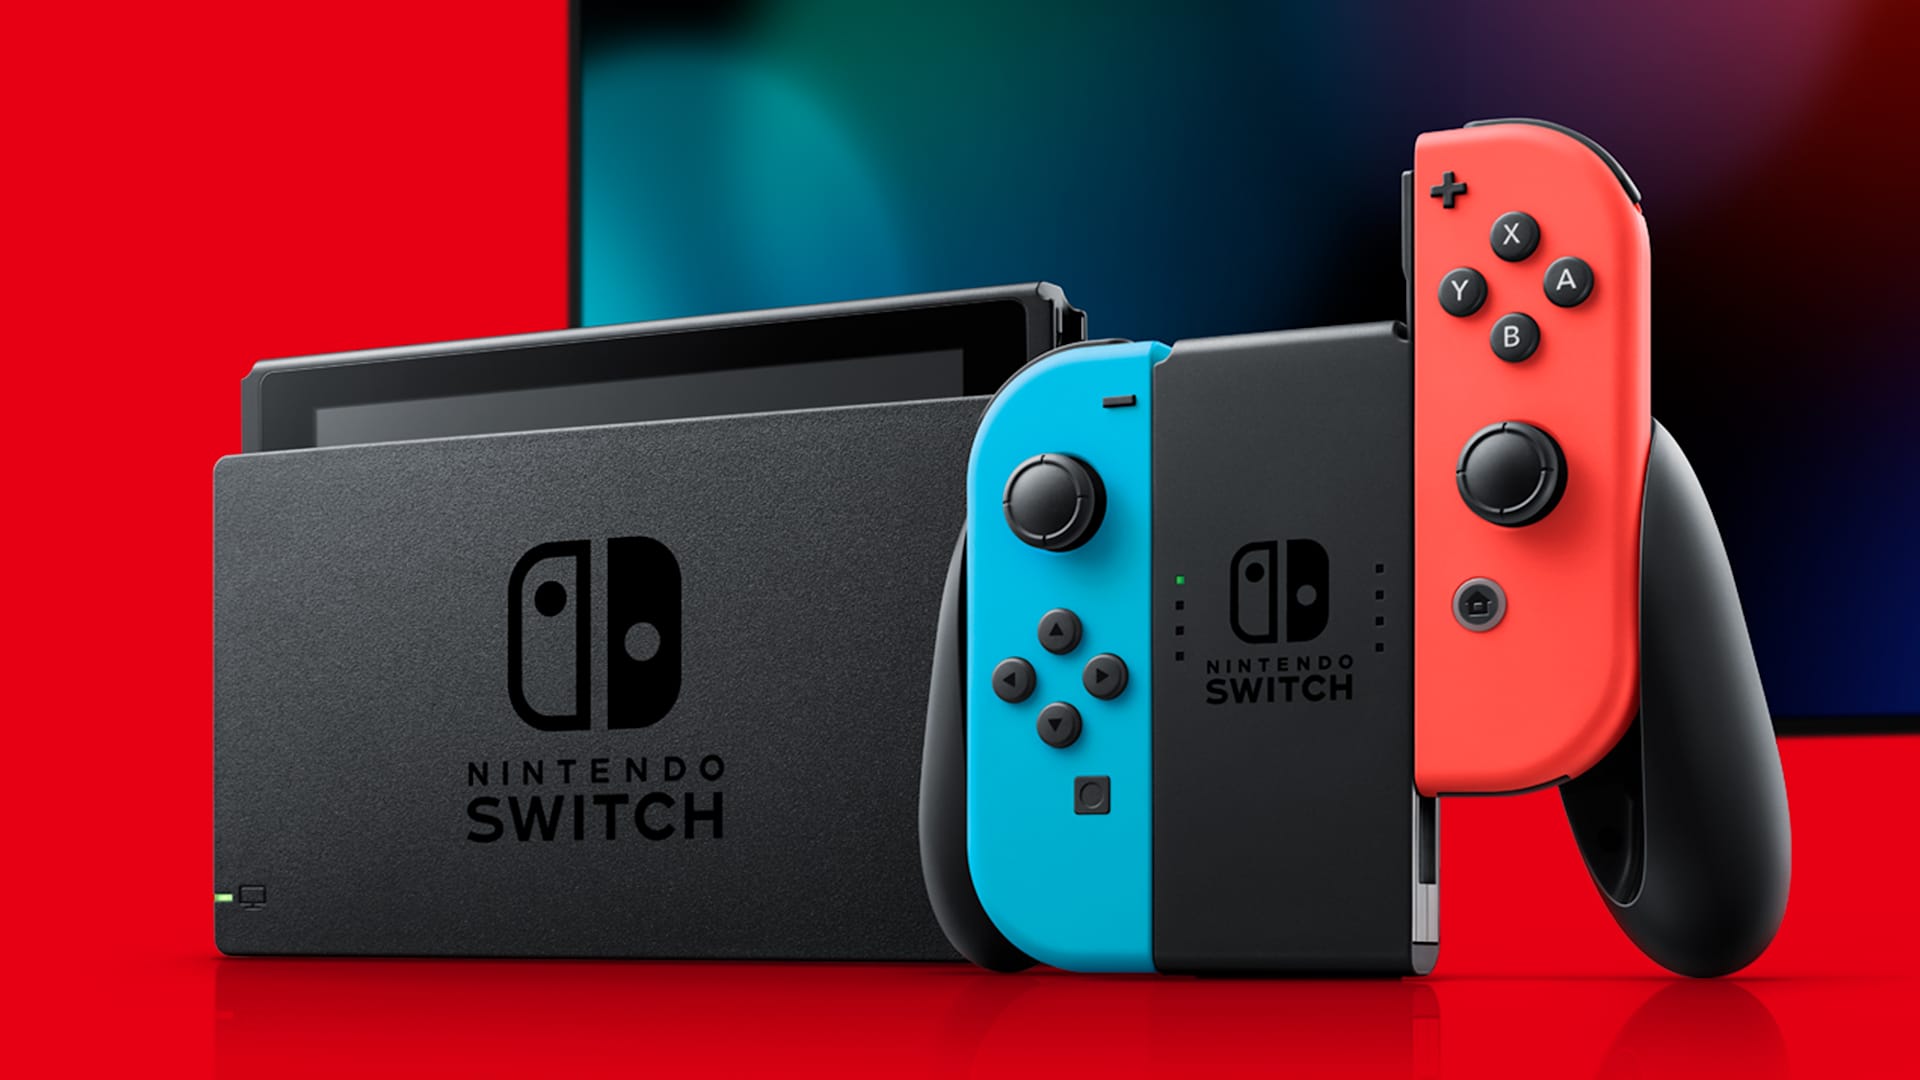 Consolas Nintendo Switch